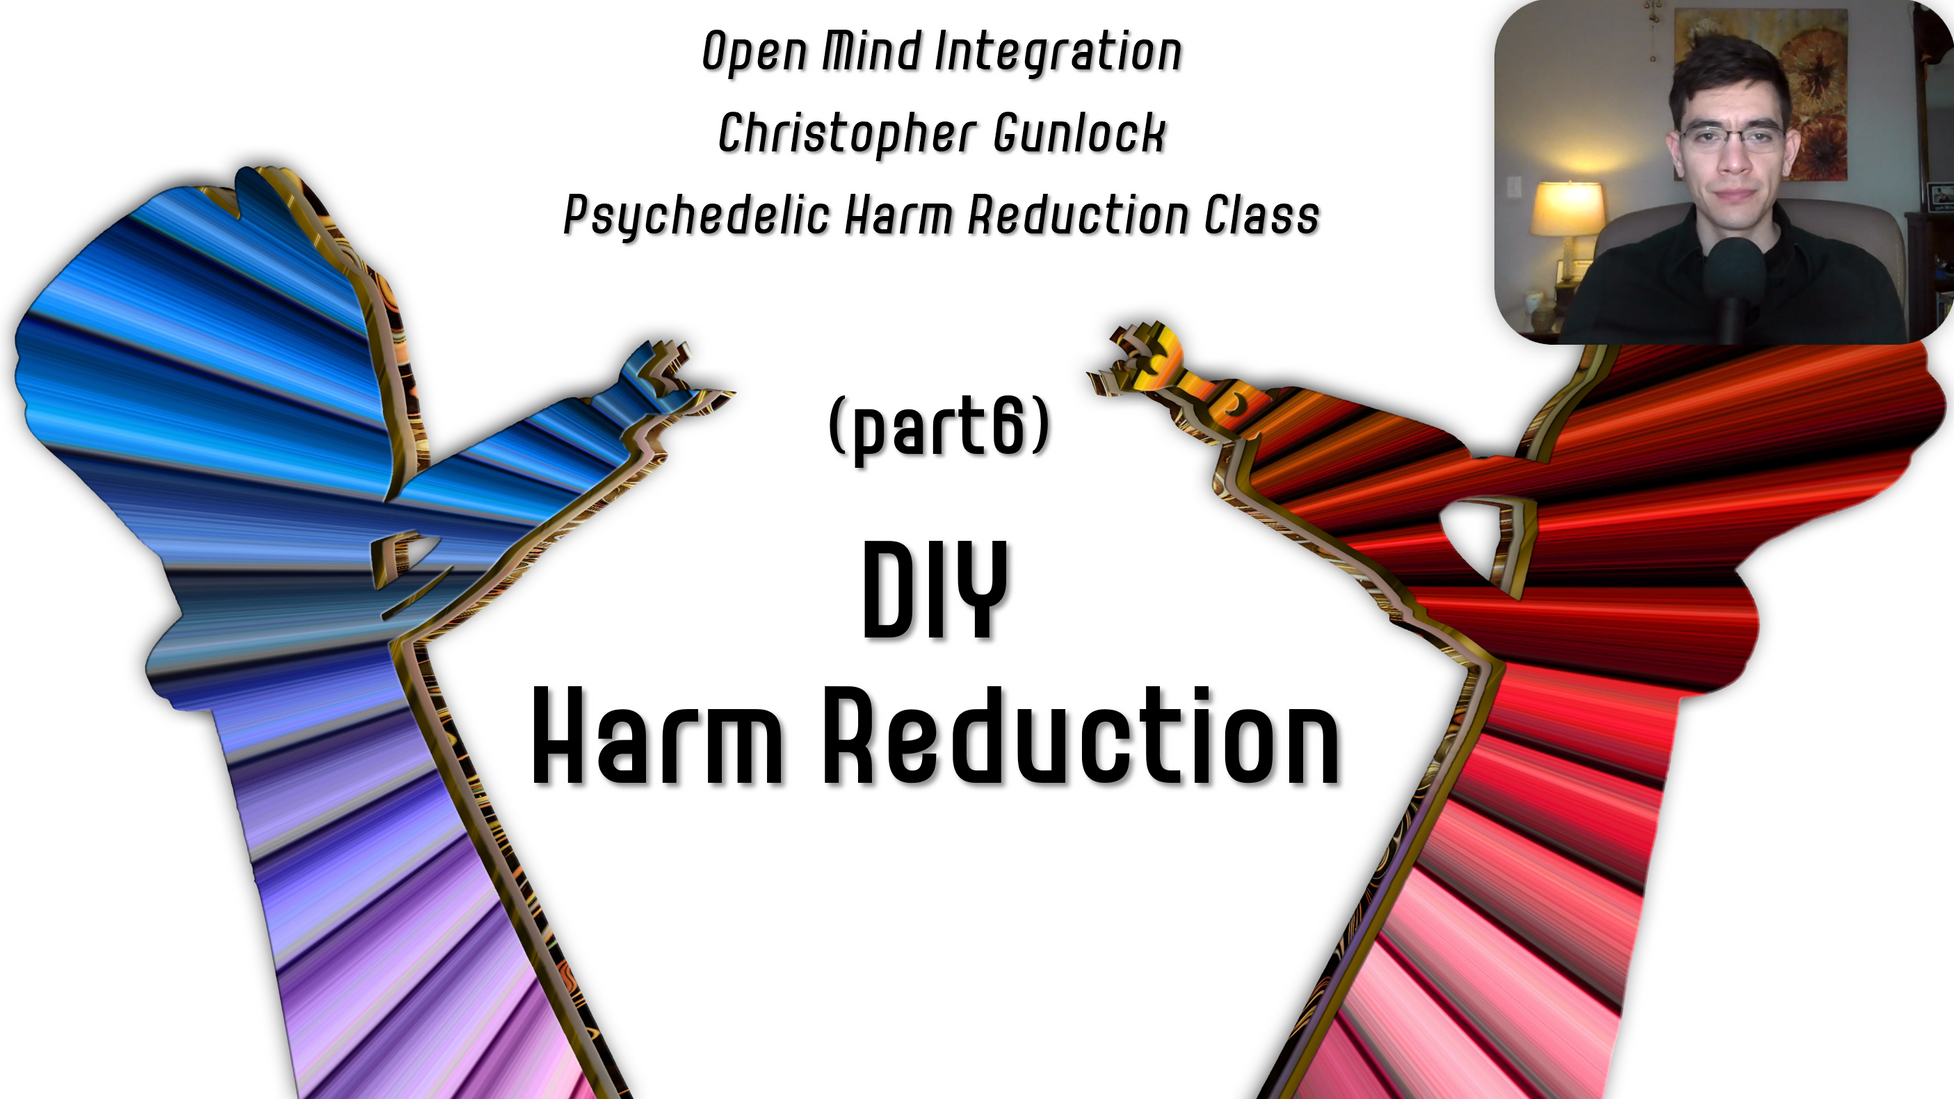 Part 6: DIY Harm Reduction